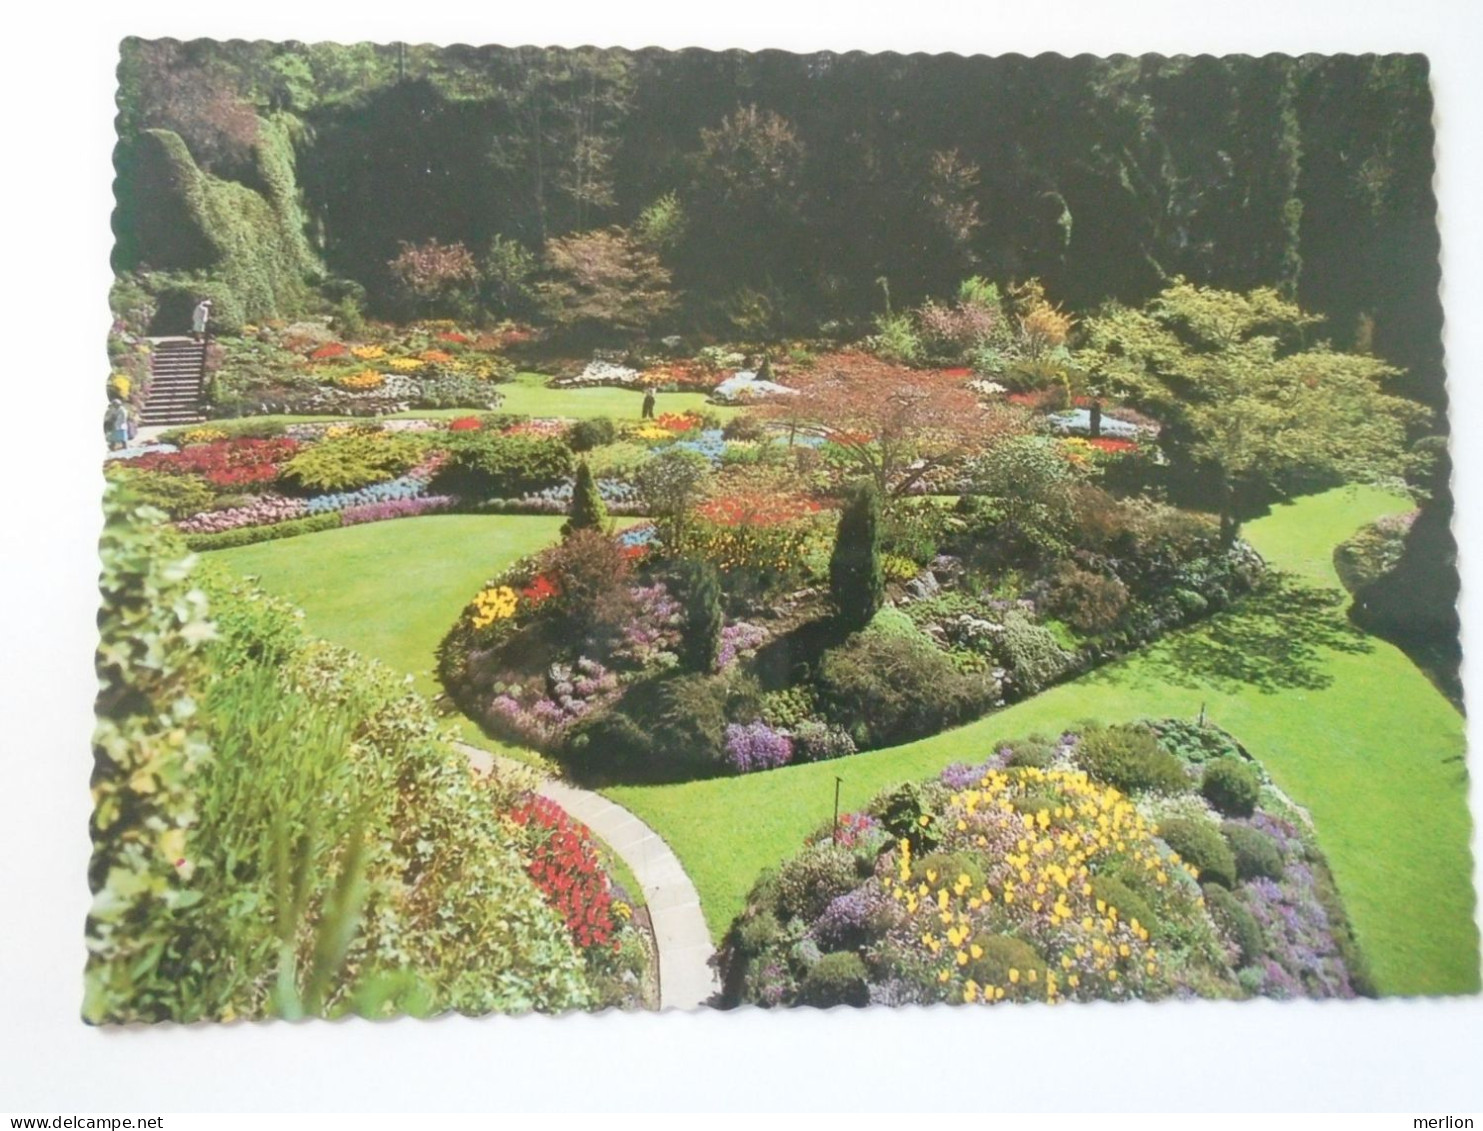 D198659     Old Postcard -  Sunken Gardens -The Butchart Gardens - Victoria British Columbia  CANADA - Victoria